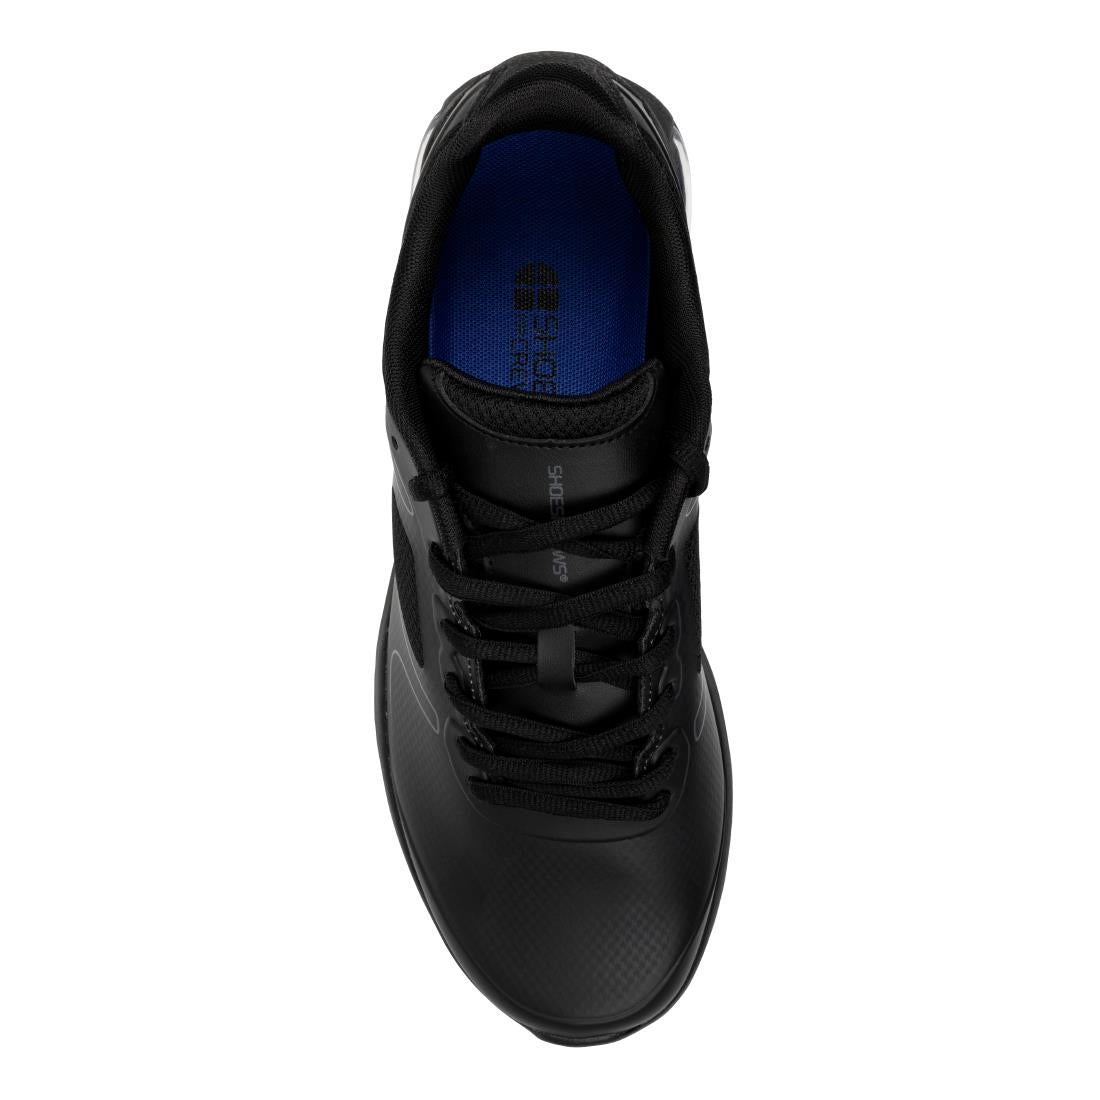 BB586-40 Shoes for Crews Men's Evolution Trainers Black Size 40